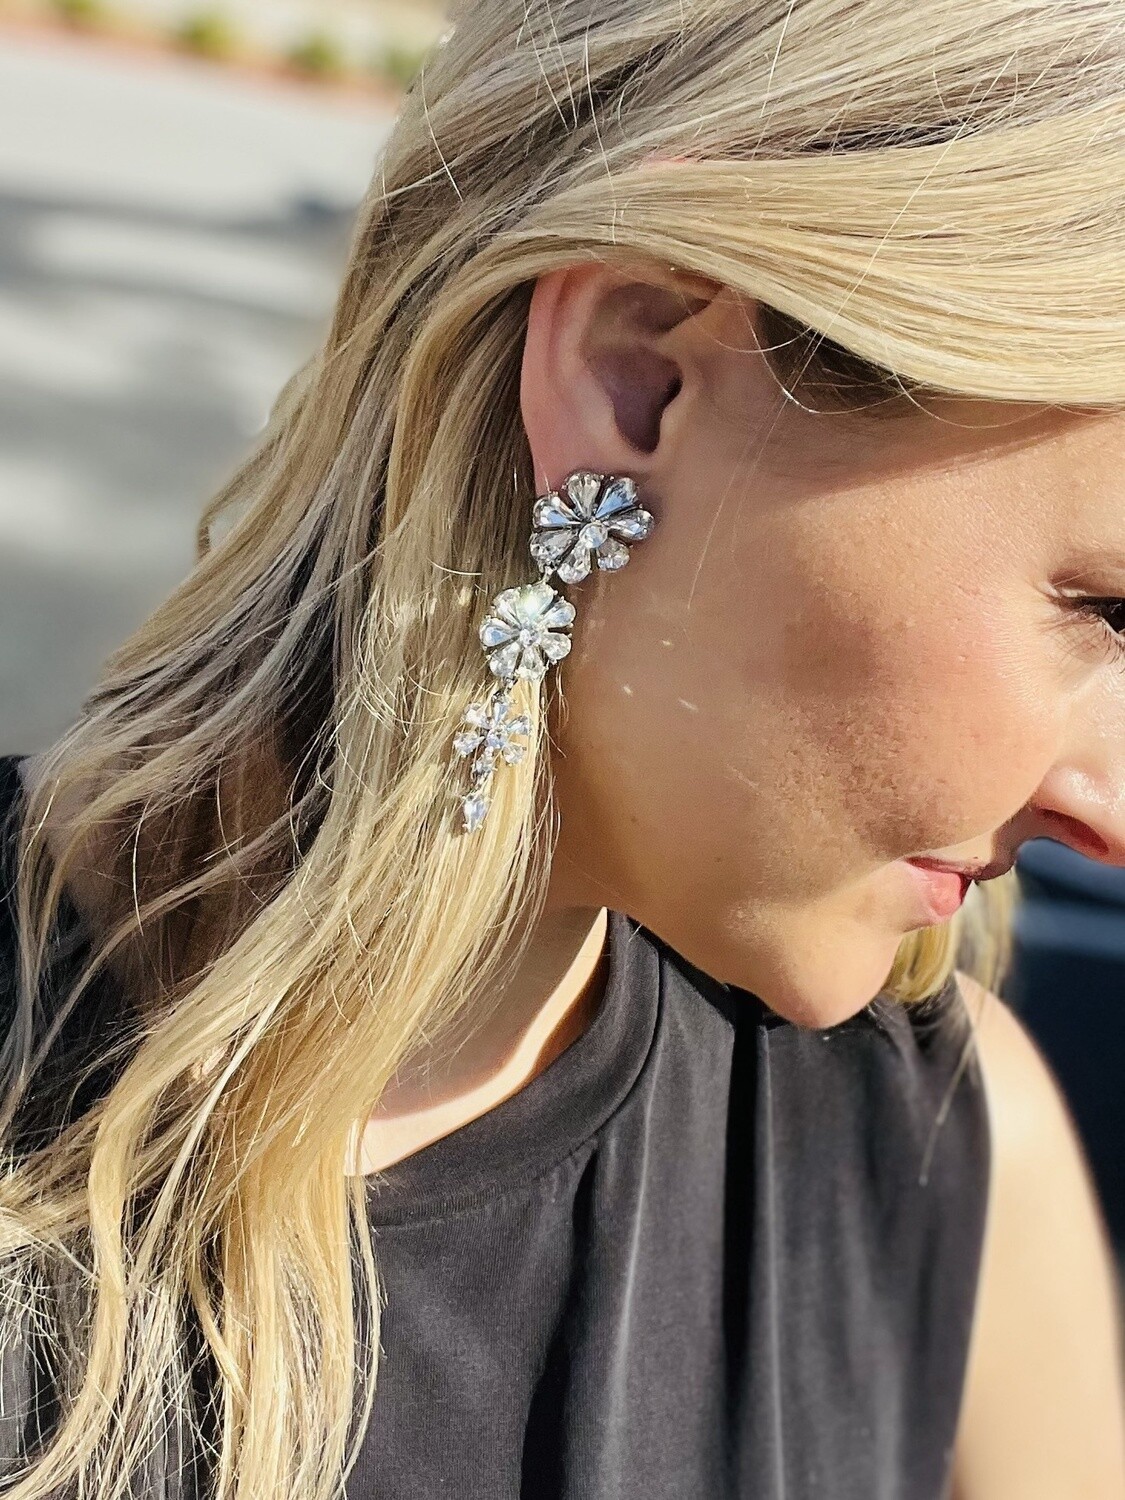 Flower Trim Earrings, color: Silver Trim